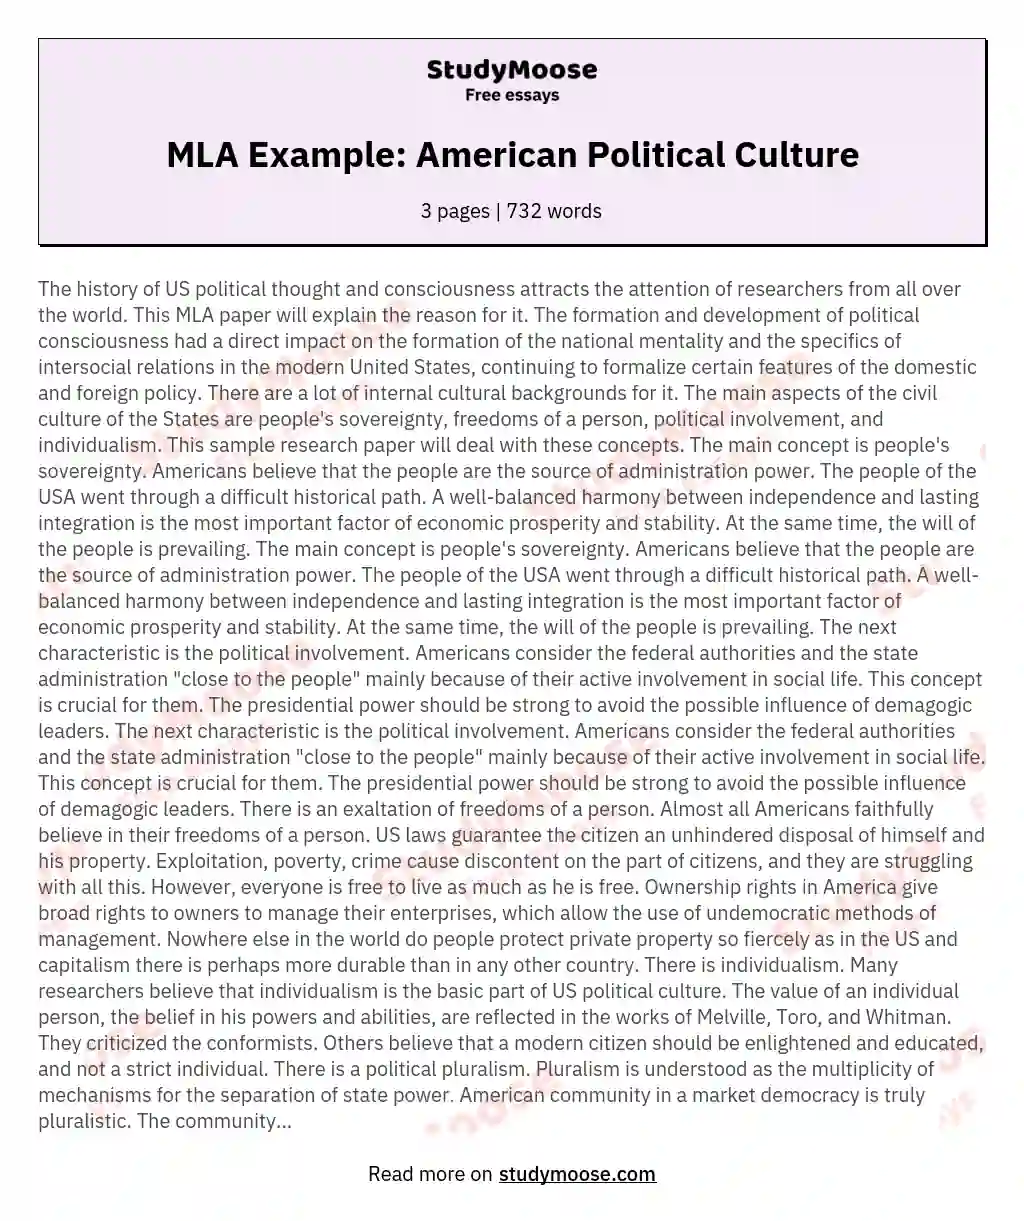 MLA Example: American Political Culture essay